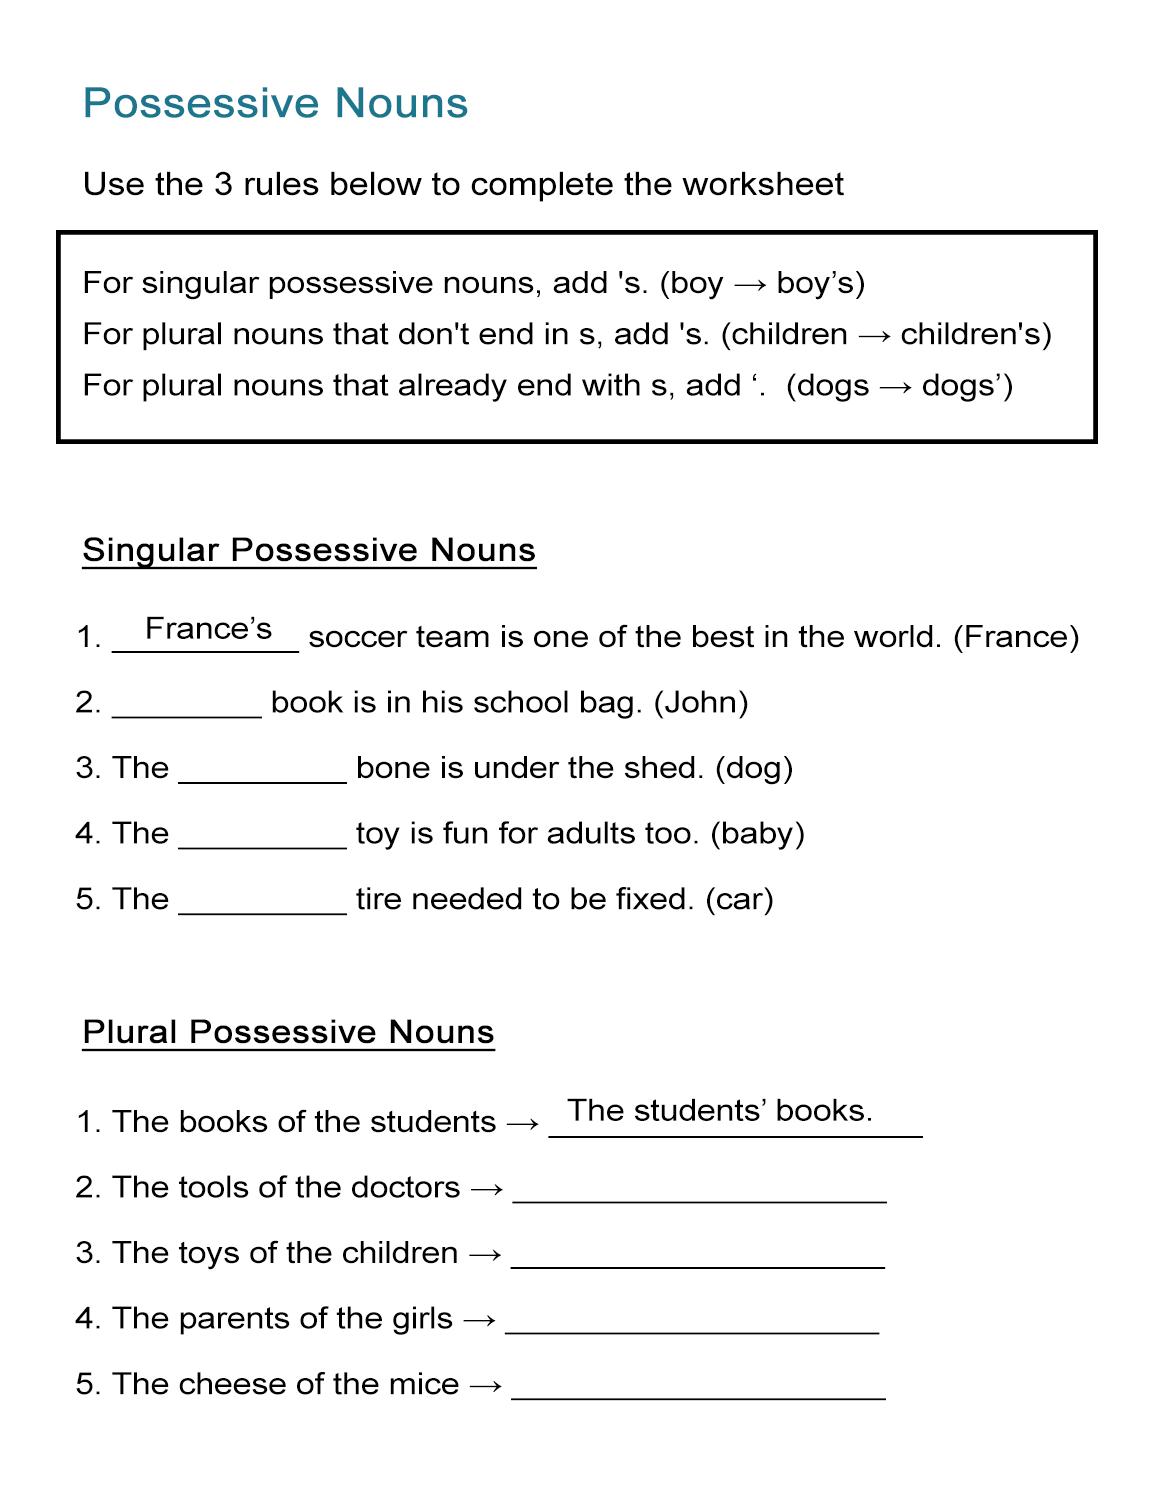 Possessive Nouns Worksheet: Singular And Plural Nouns - All Esl - Free Printable Possessive Nouns Worksheets